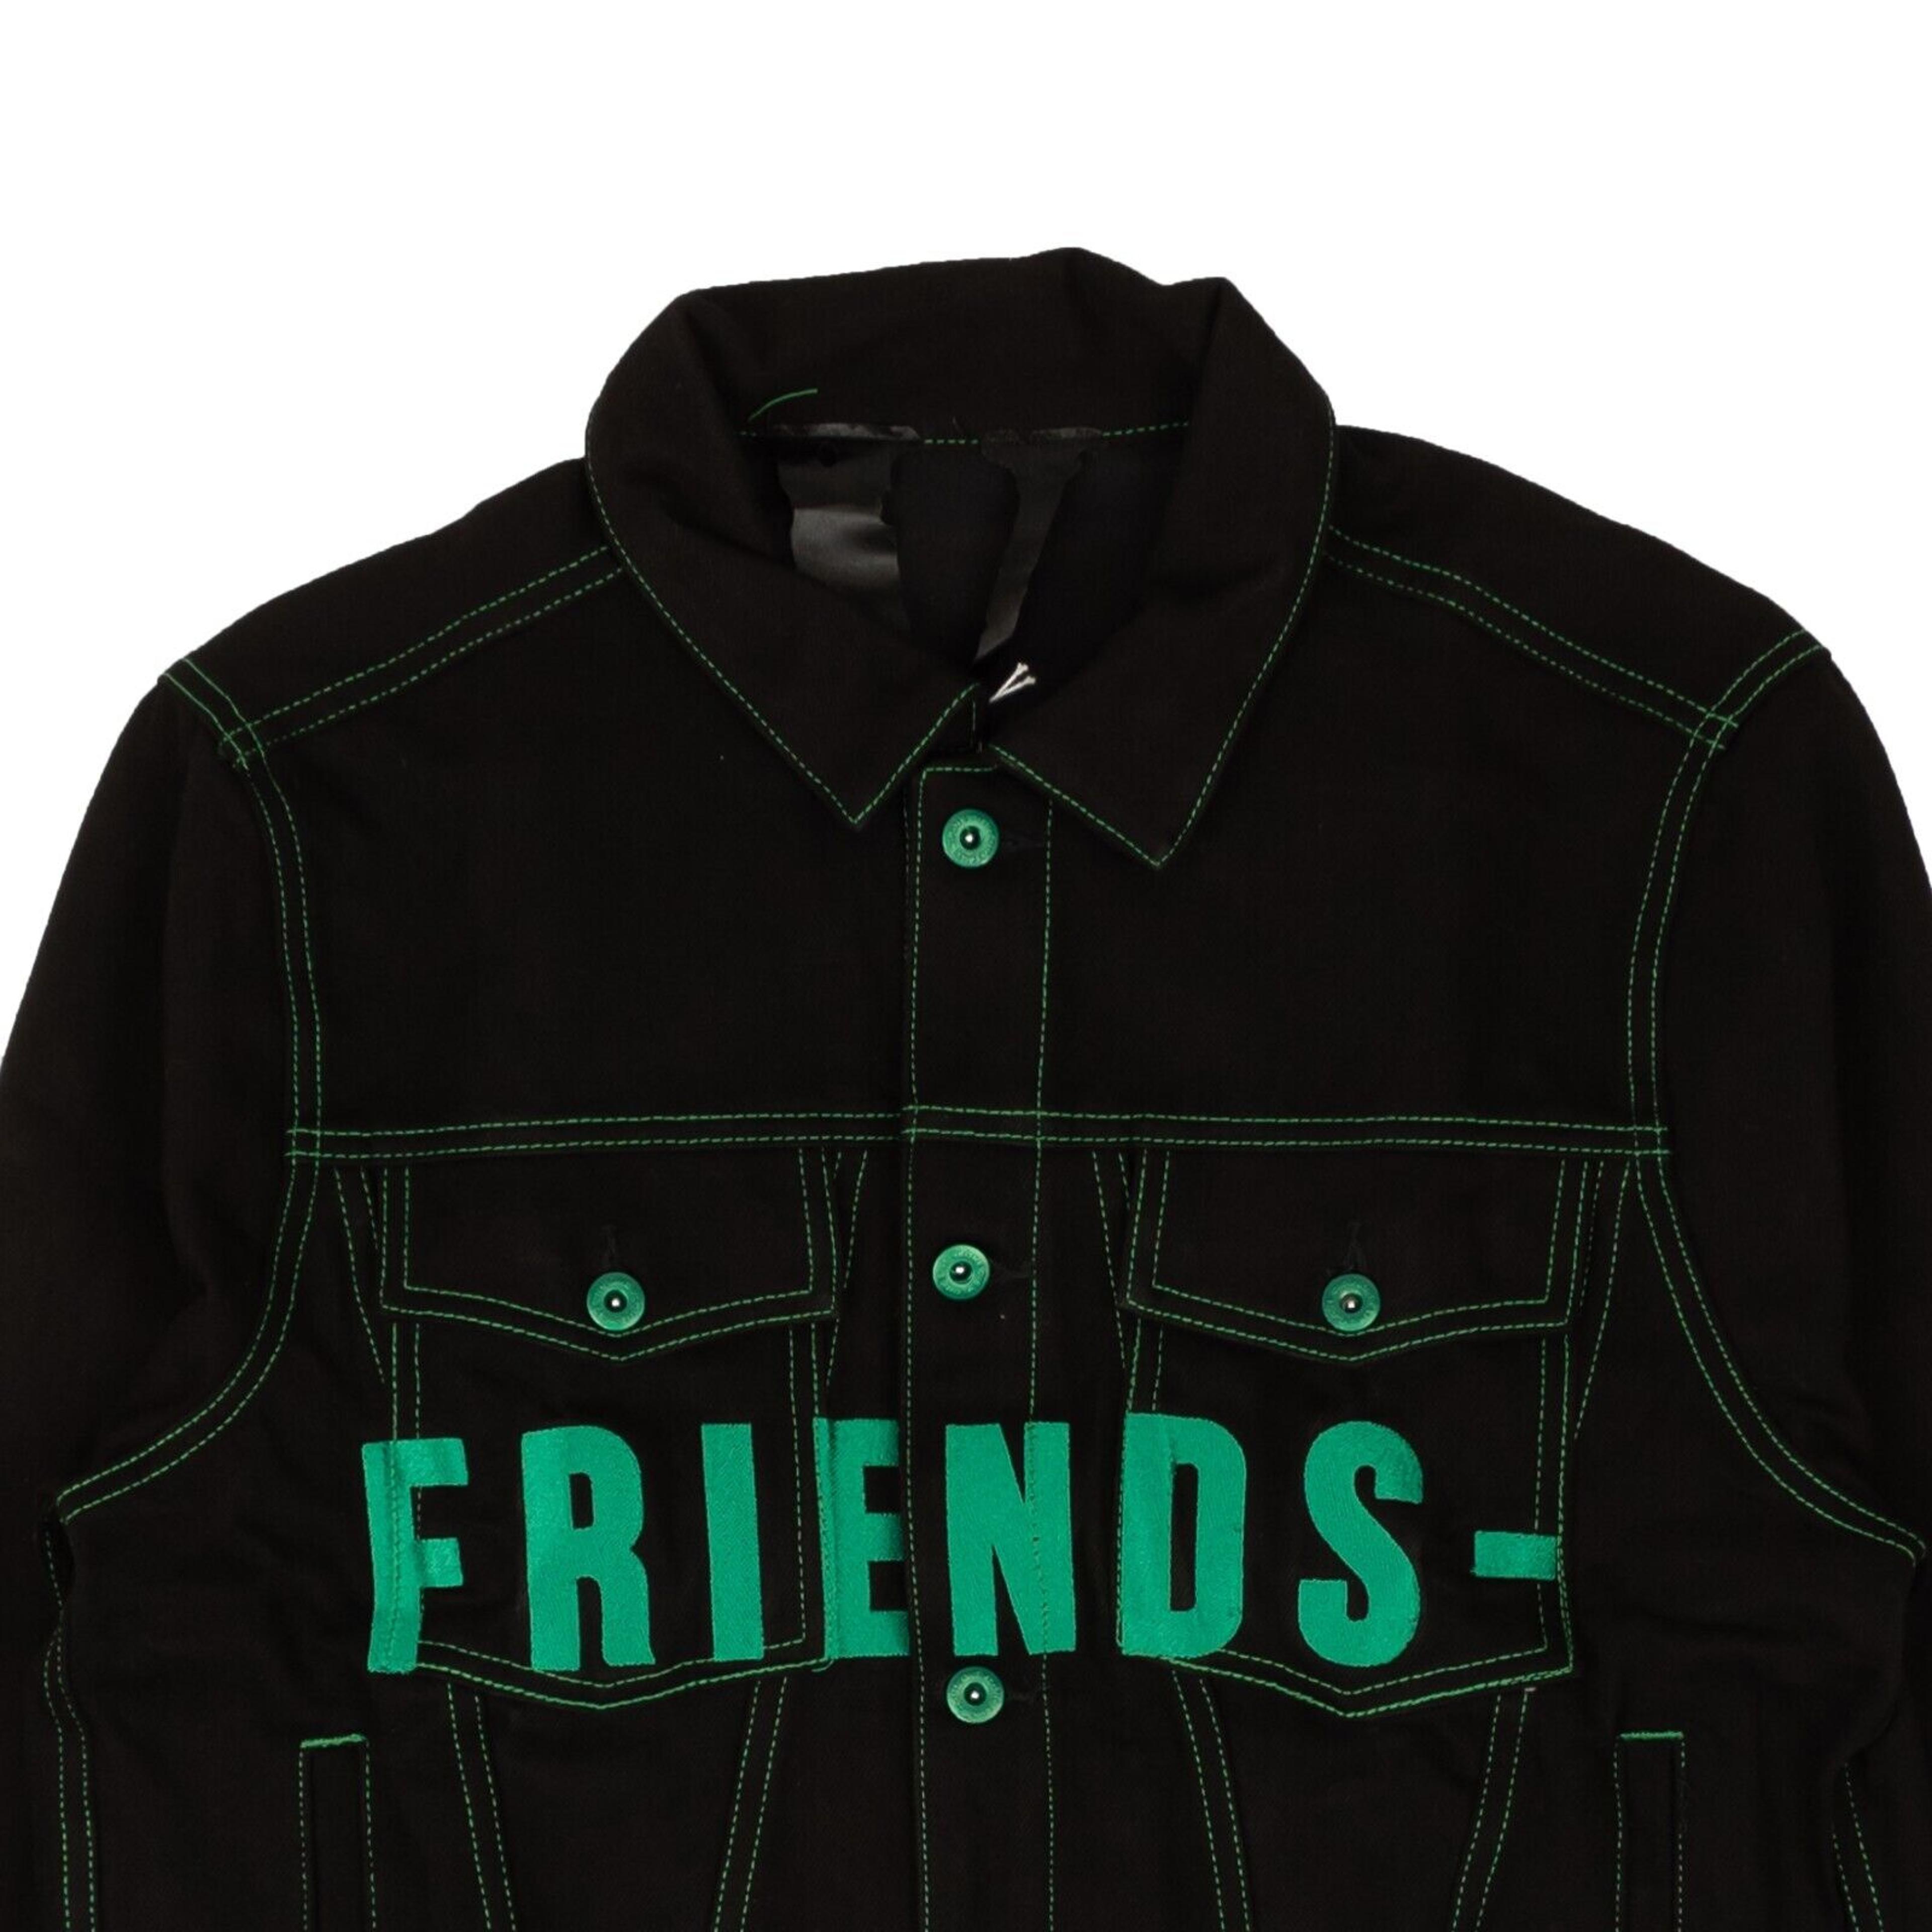 Alternate View 1 of Black And Green Friends Denim Jacket